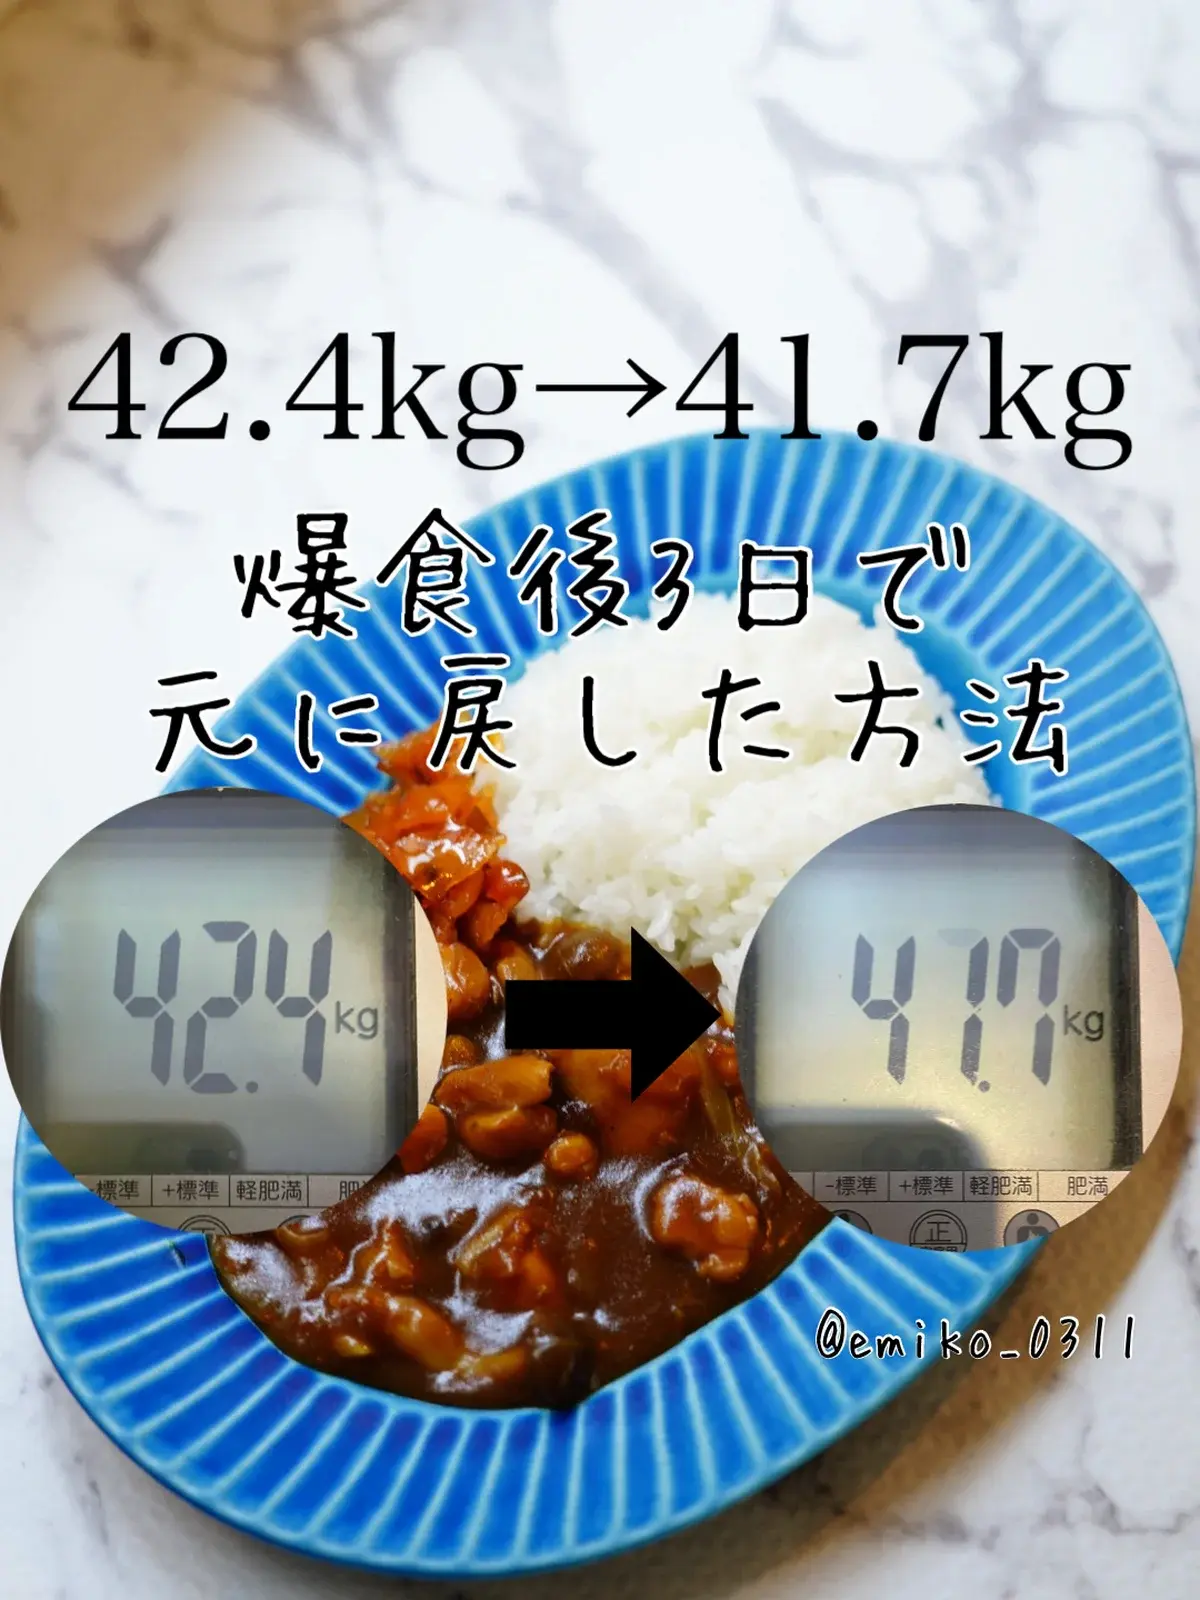 19kg痩せた方法//止まらない食欲の時の対策の画像 (1枚目)